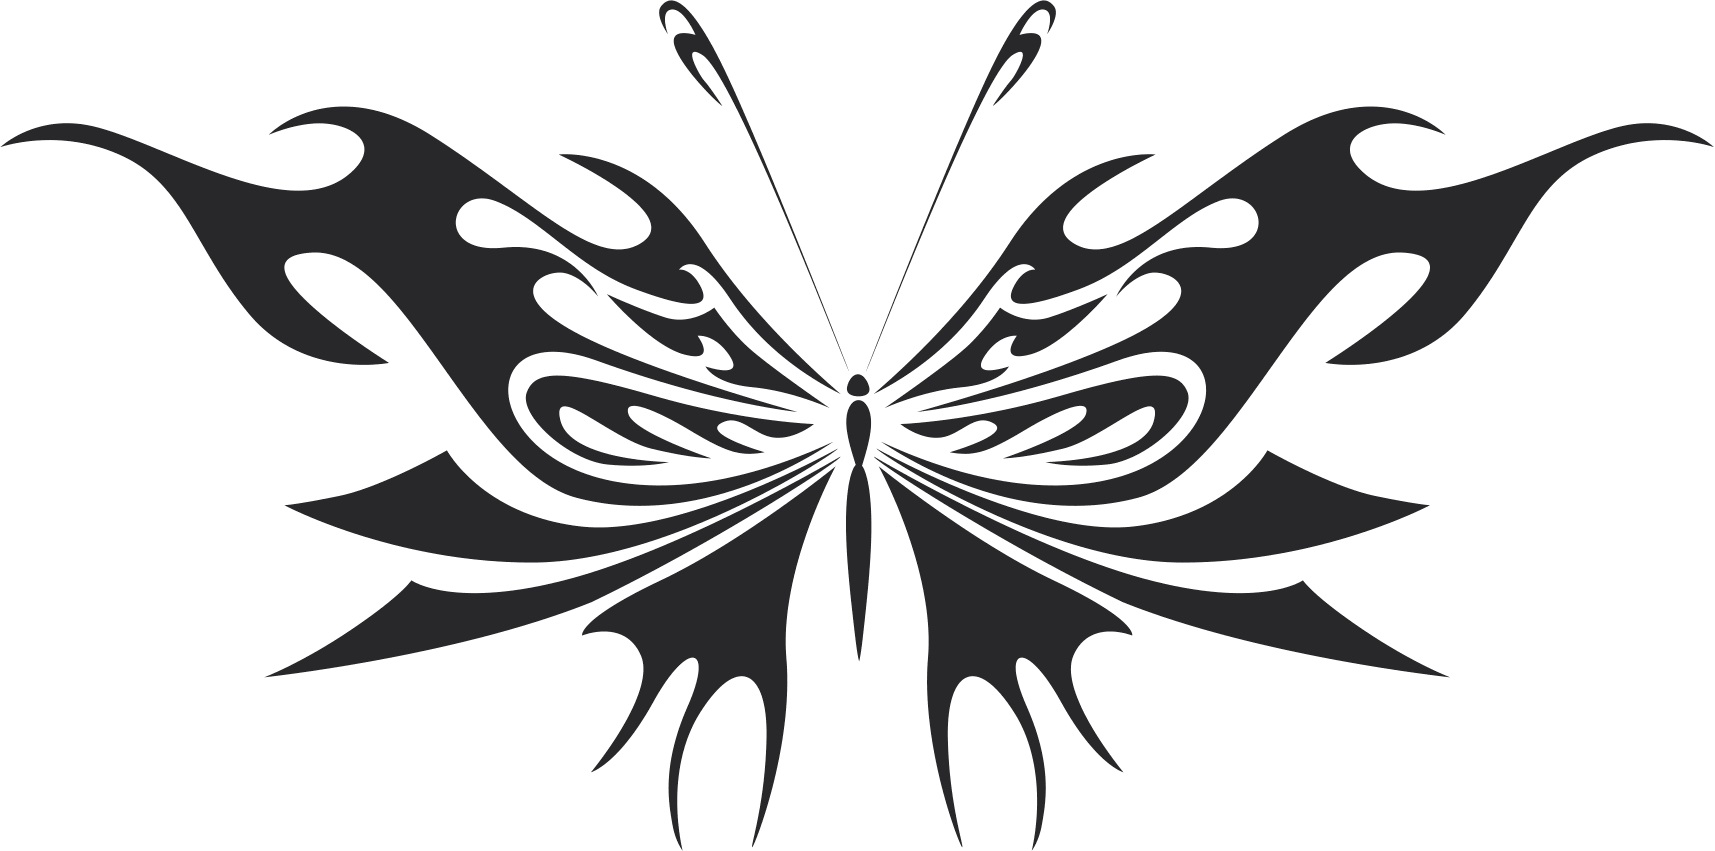 Tribal Butterfly Wildlif Vector Art Free DXF Vectors File